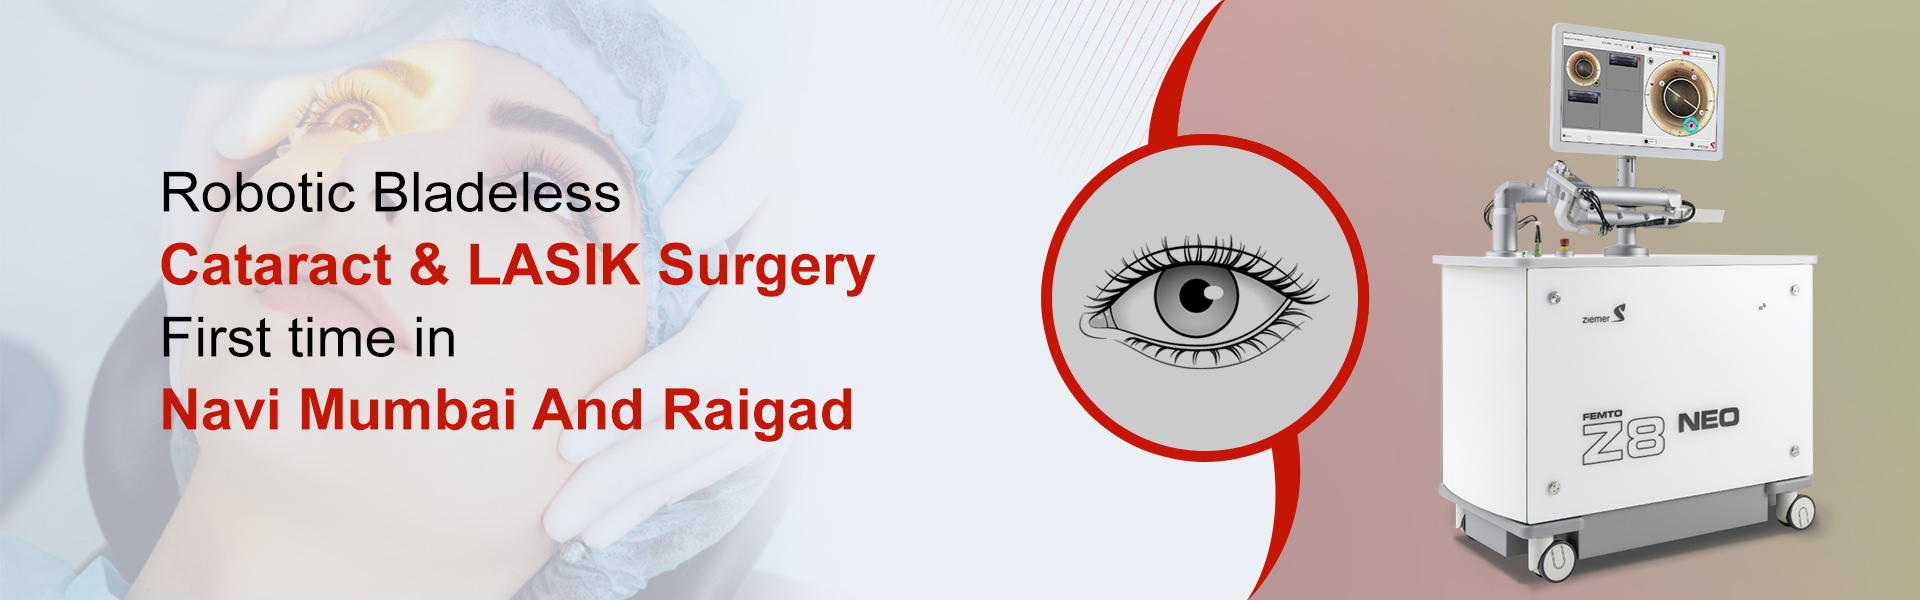 Robotic Laser Bladeless Cataract and Lasik Surgery in Navi Mumbai and Dombivali at Laxmi Eye Hospitals and Institute